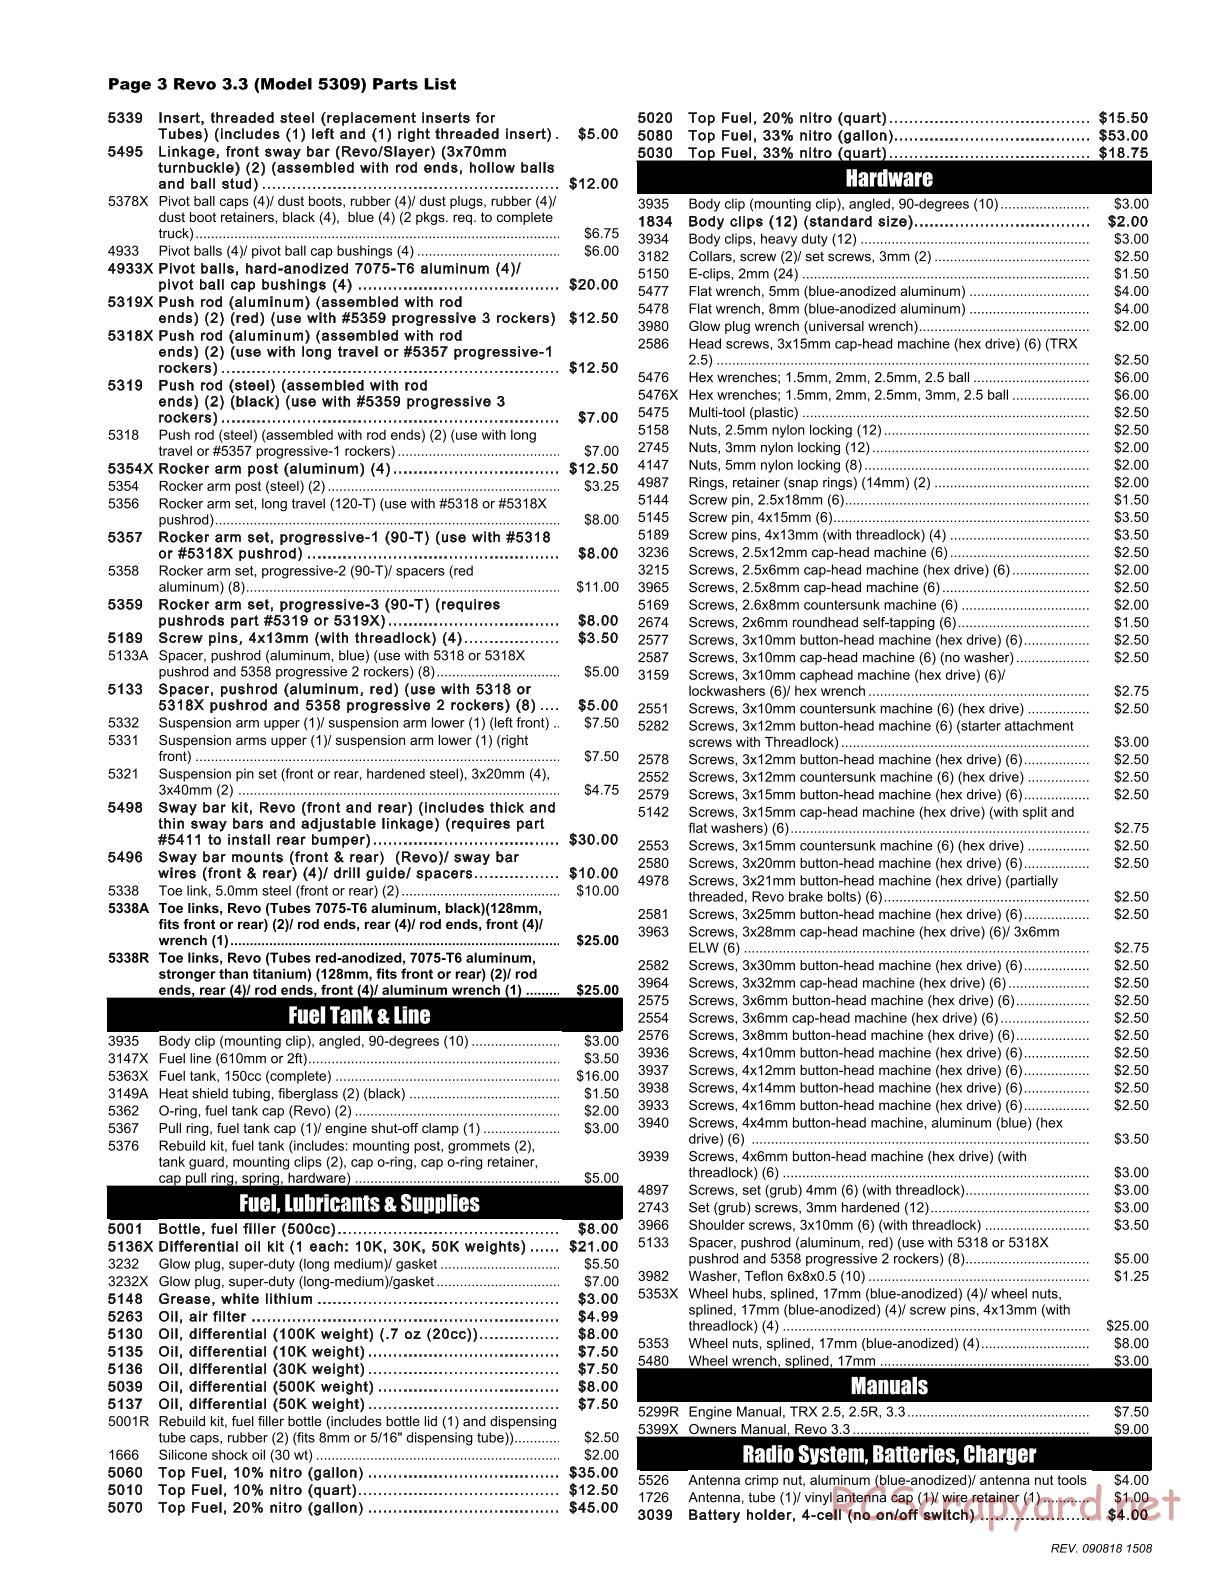 Traxxas - Revo 3.3 - Parts List - Page 3